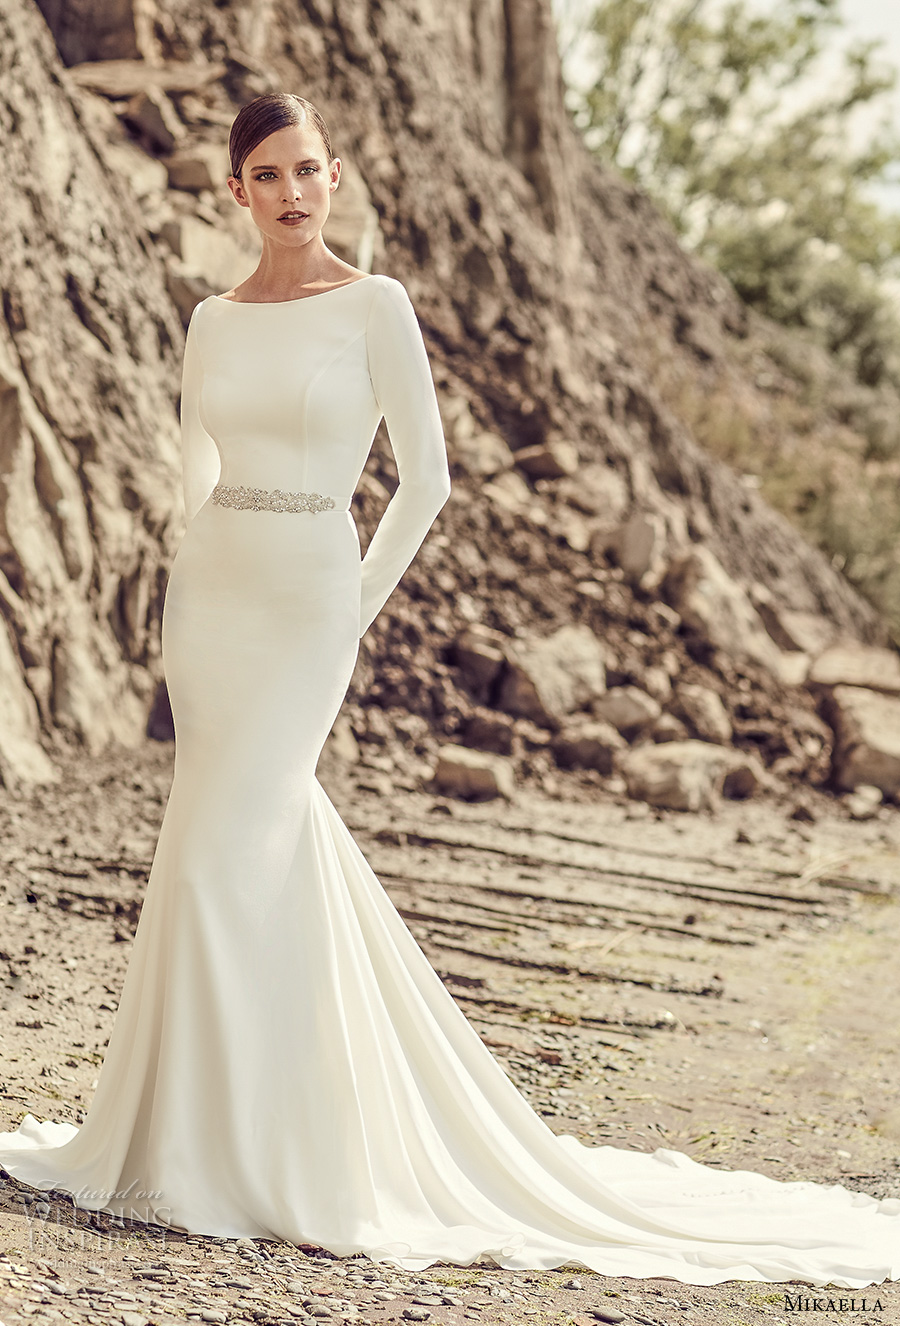 mikaella spring 2017 bridal long sleeves bateau neckline simple clean design elegant fit and flare wedding dress open low back long train (2105) mv